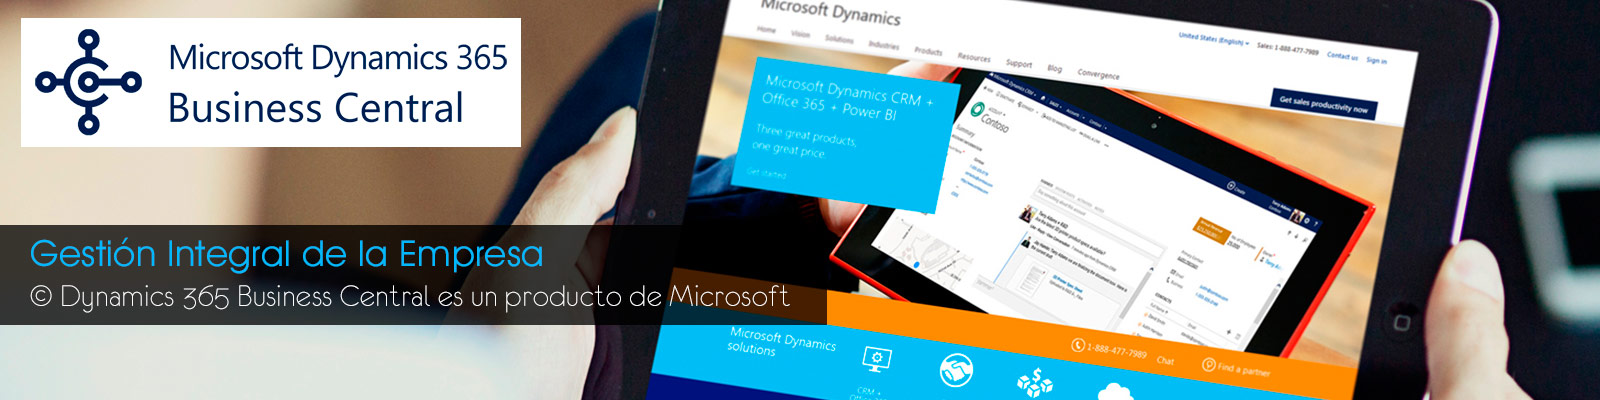 Microsoft Dynamics 365 Business Central.